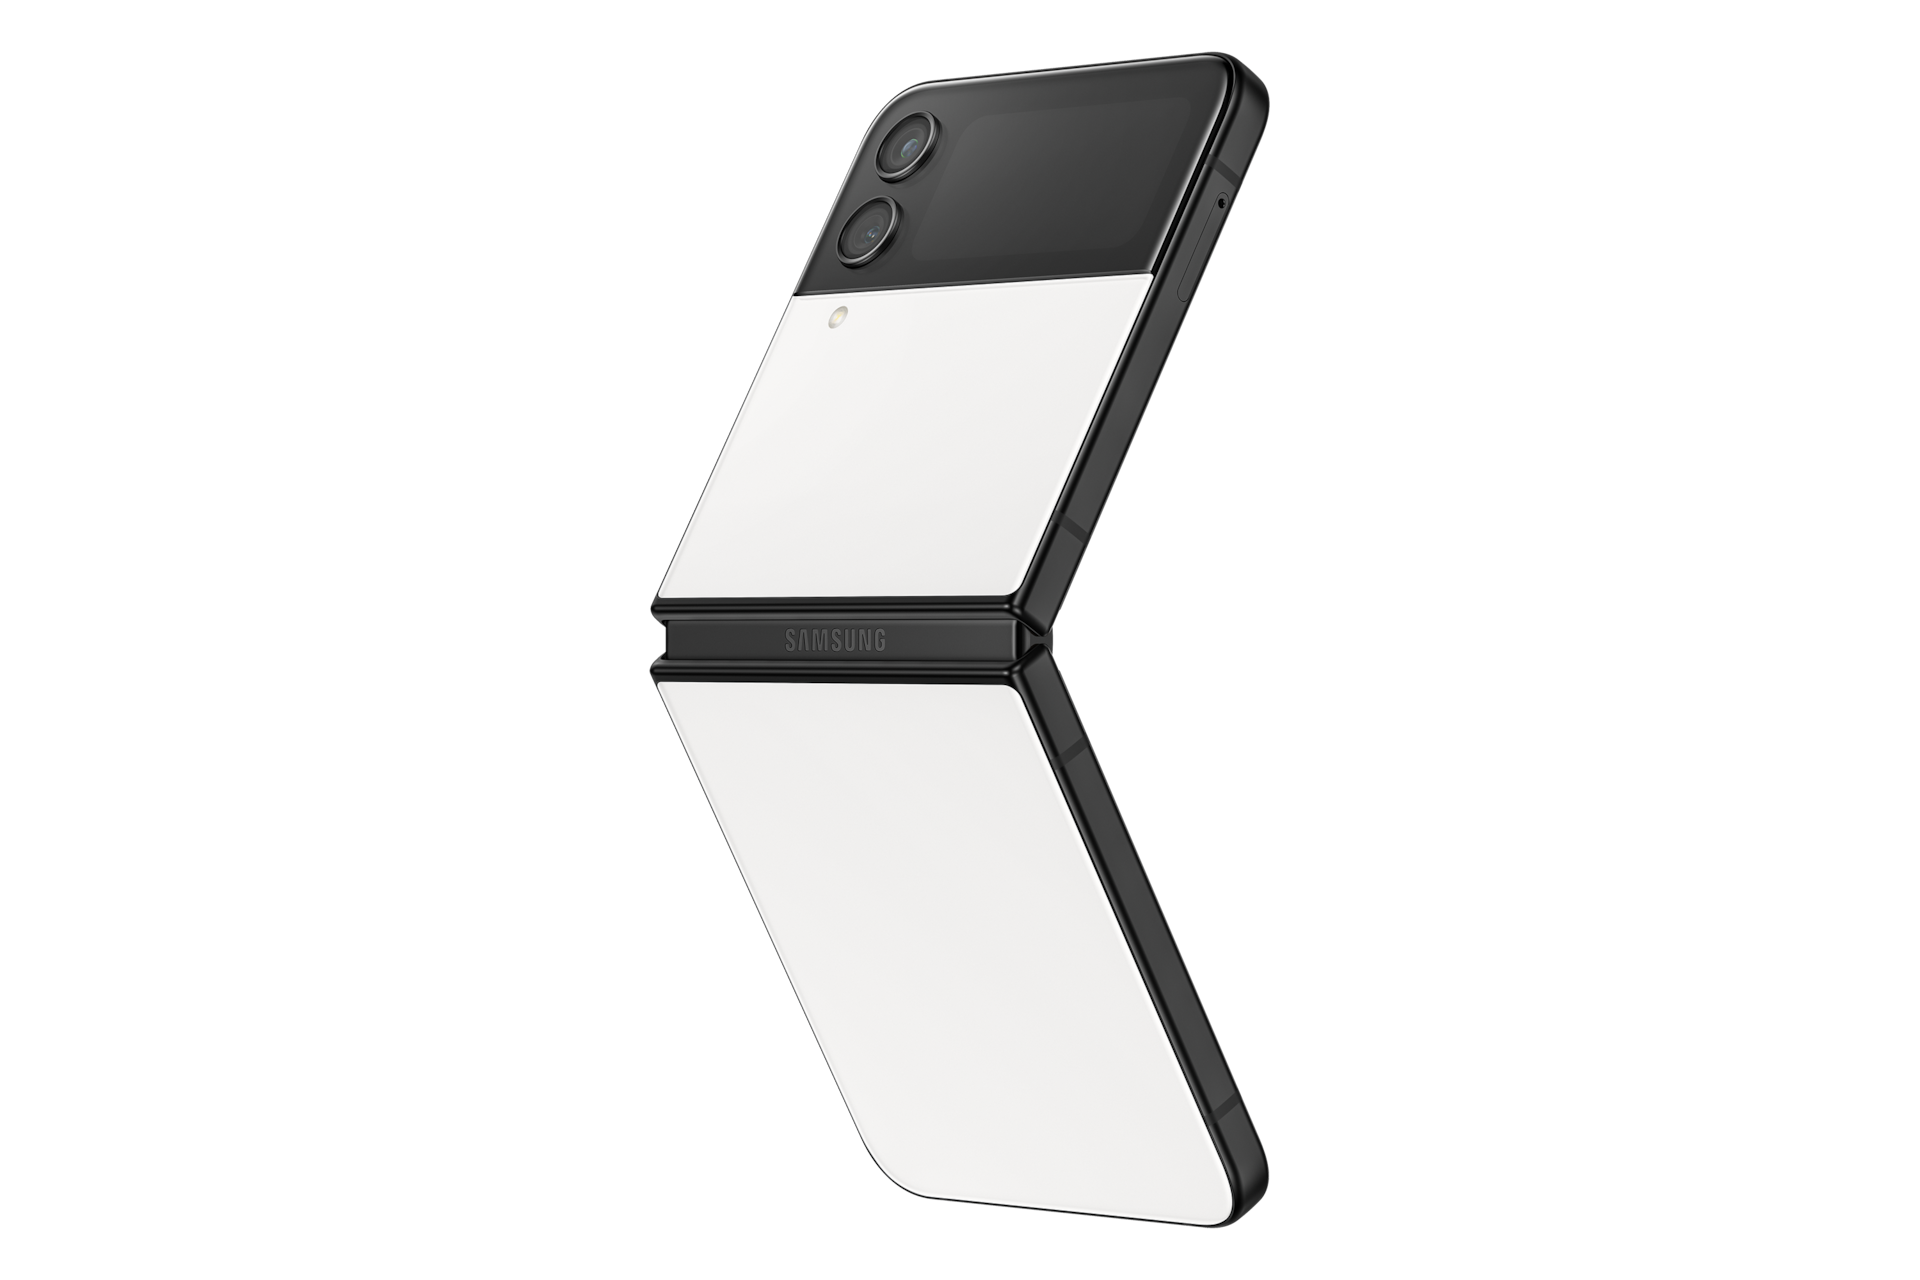 Galaxy Z Flip4 Bespoke Edition